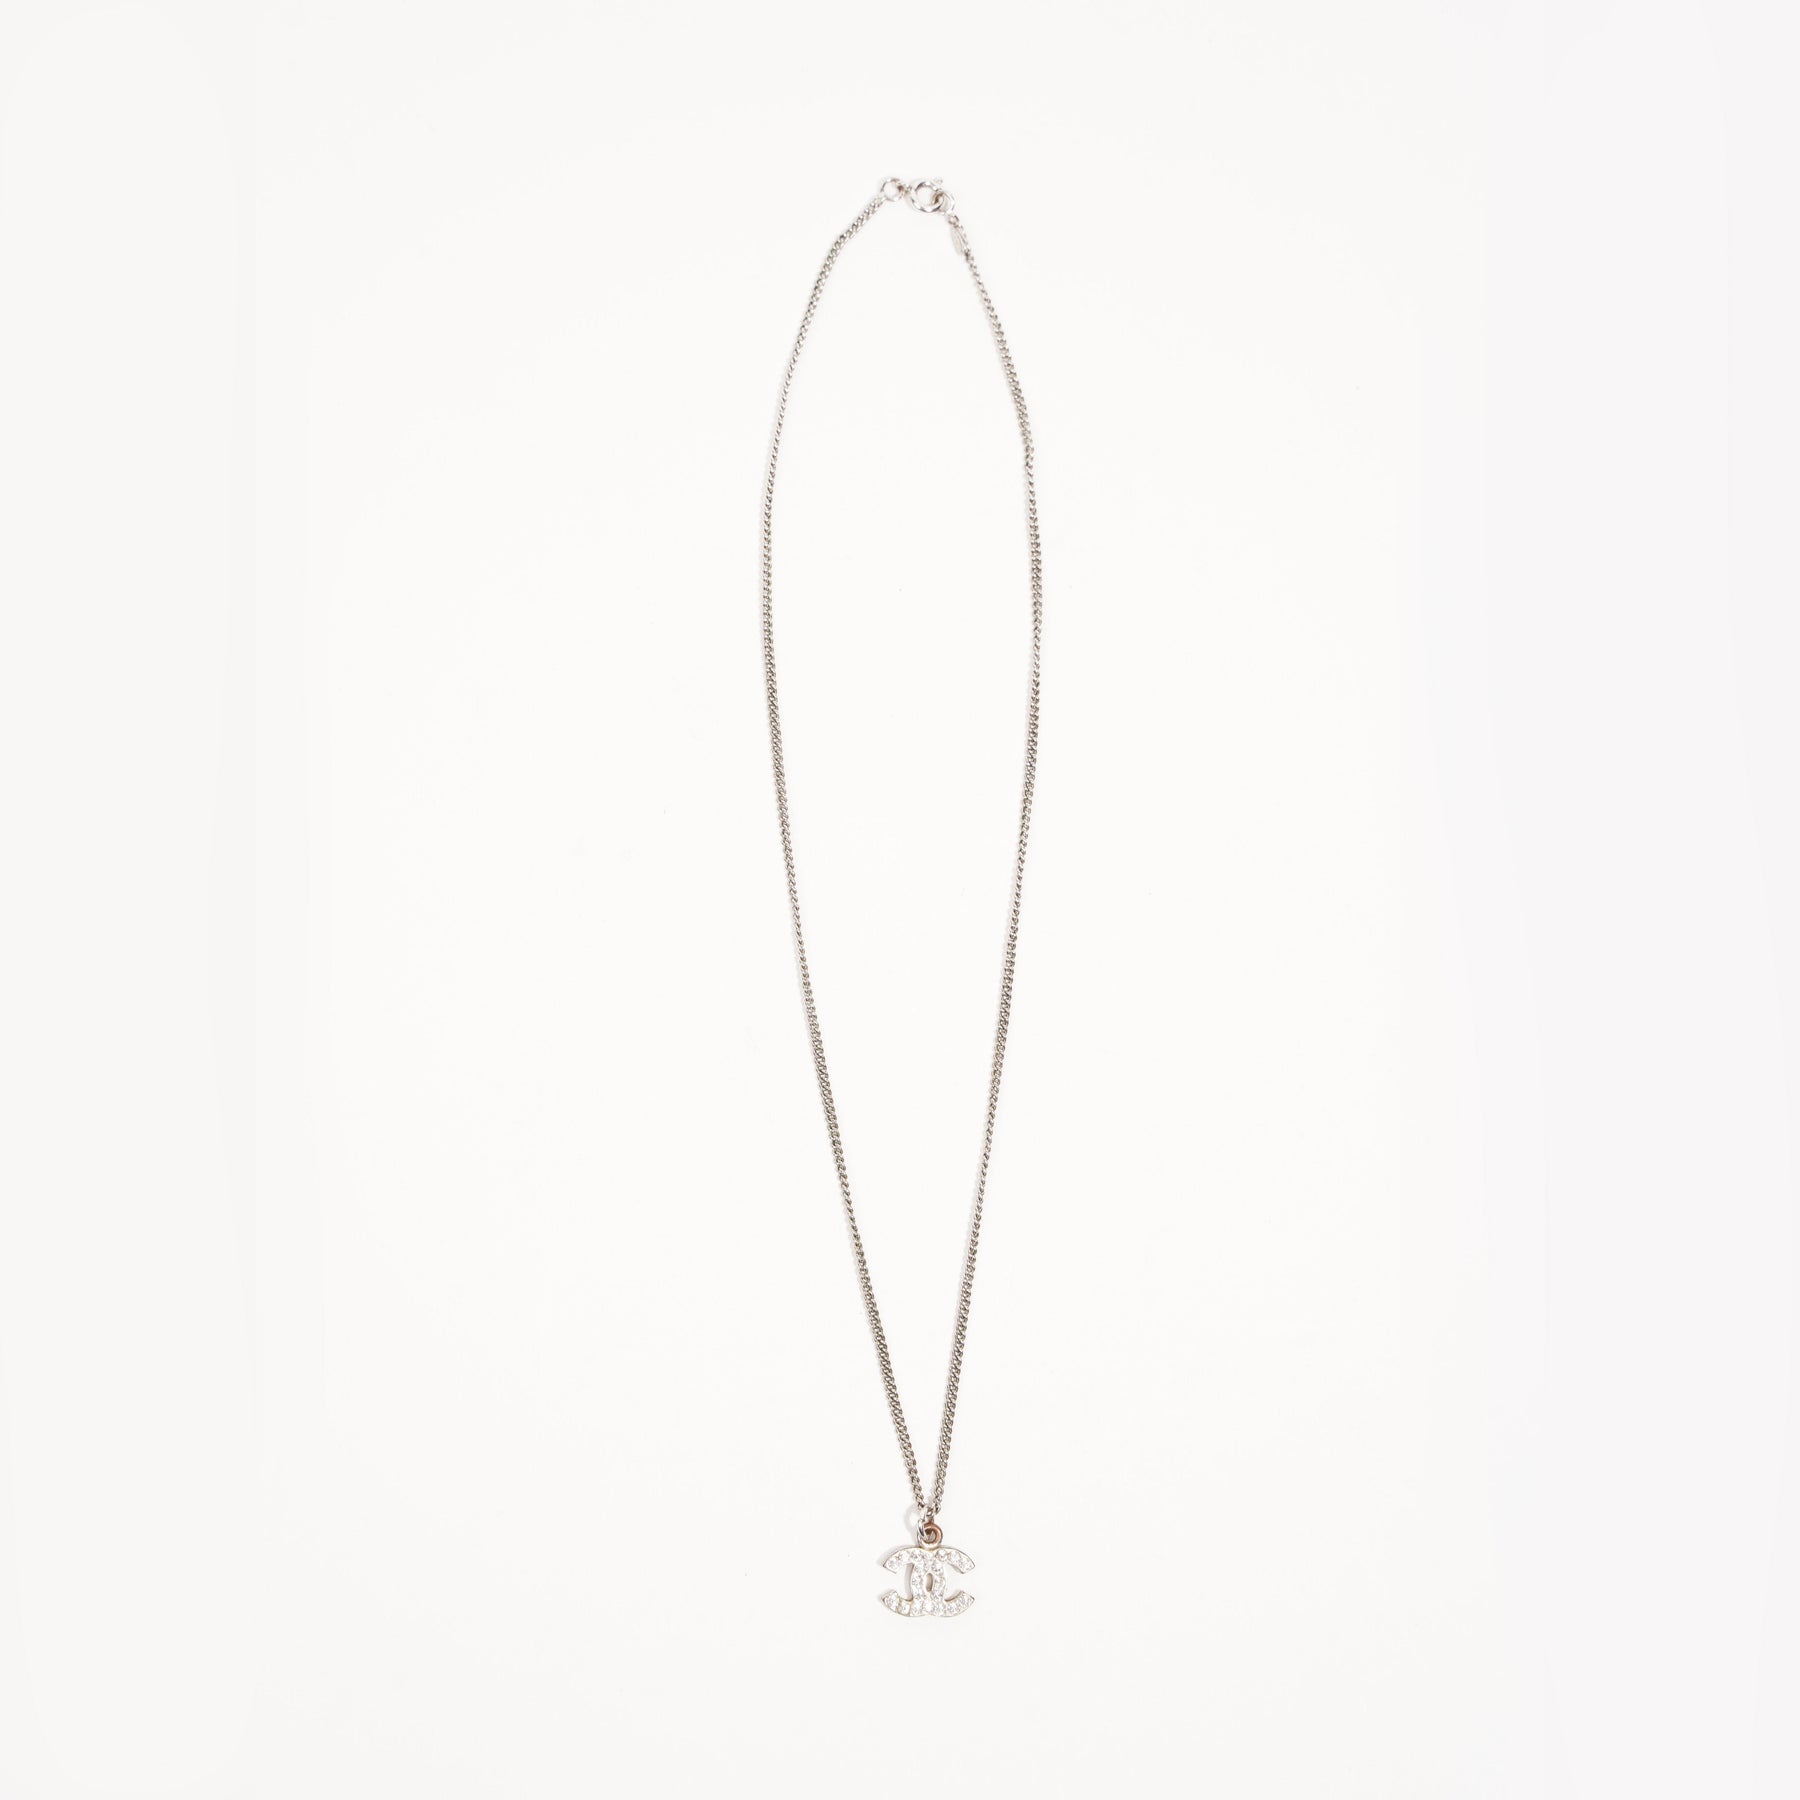 CC CHANEL necklace in silver  VALOIS VINTAGE PARIS